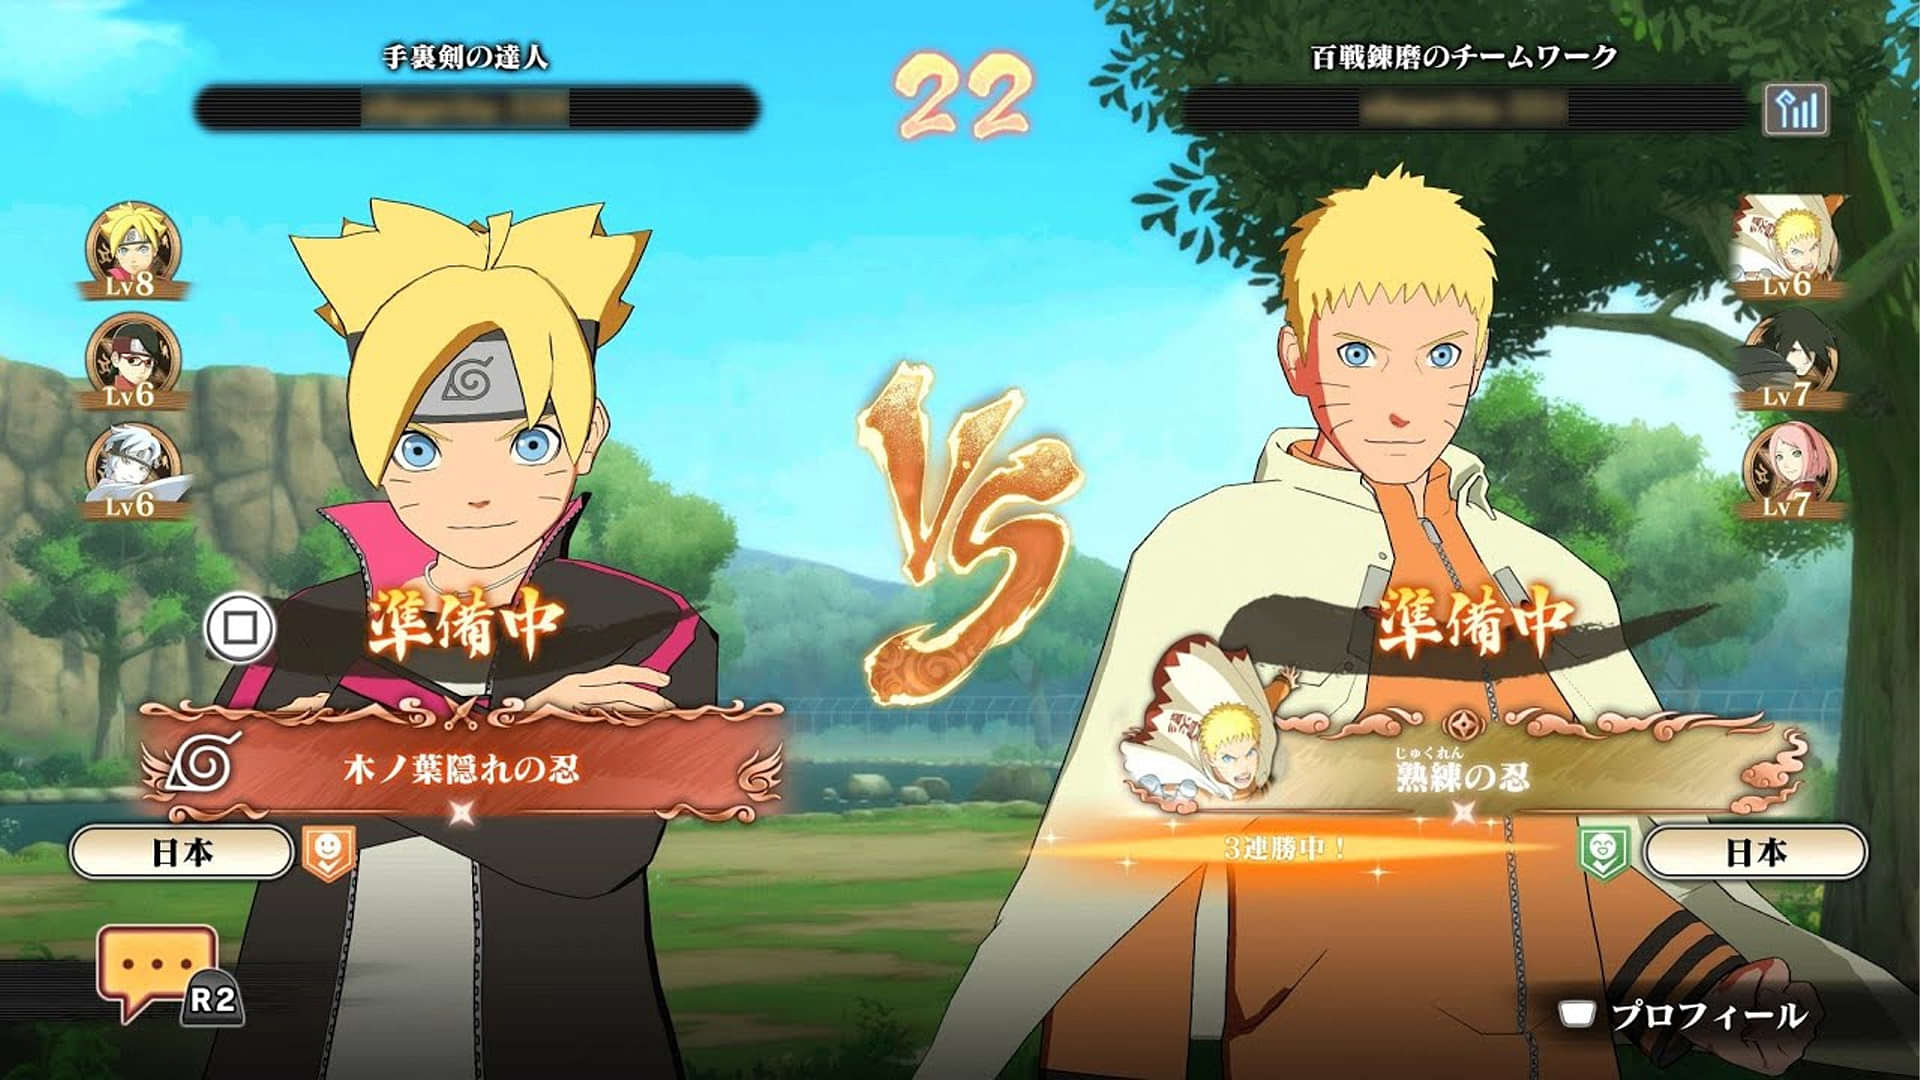 Naruto x Boruto: Ultimate Ninja Storm CONNECTIONS for consoles